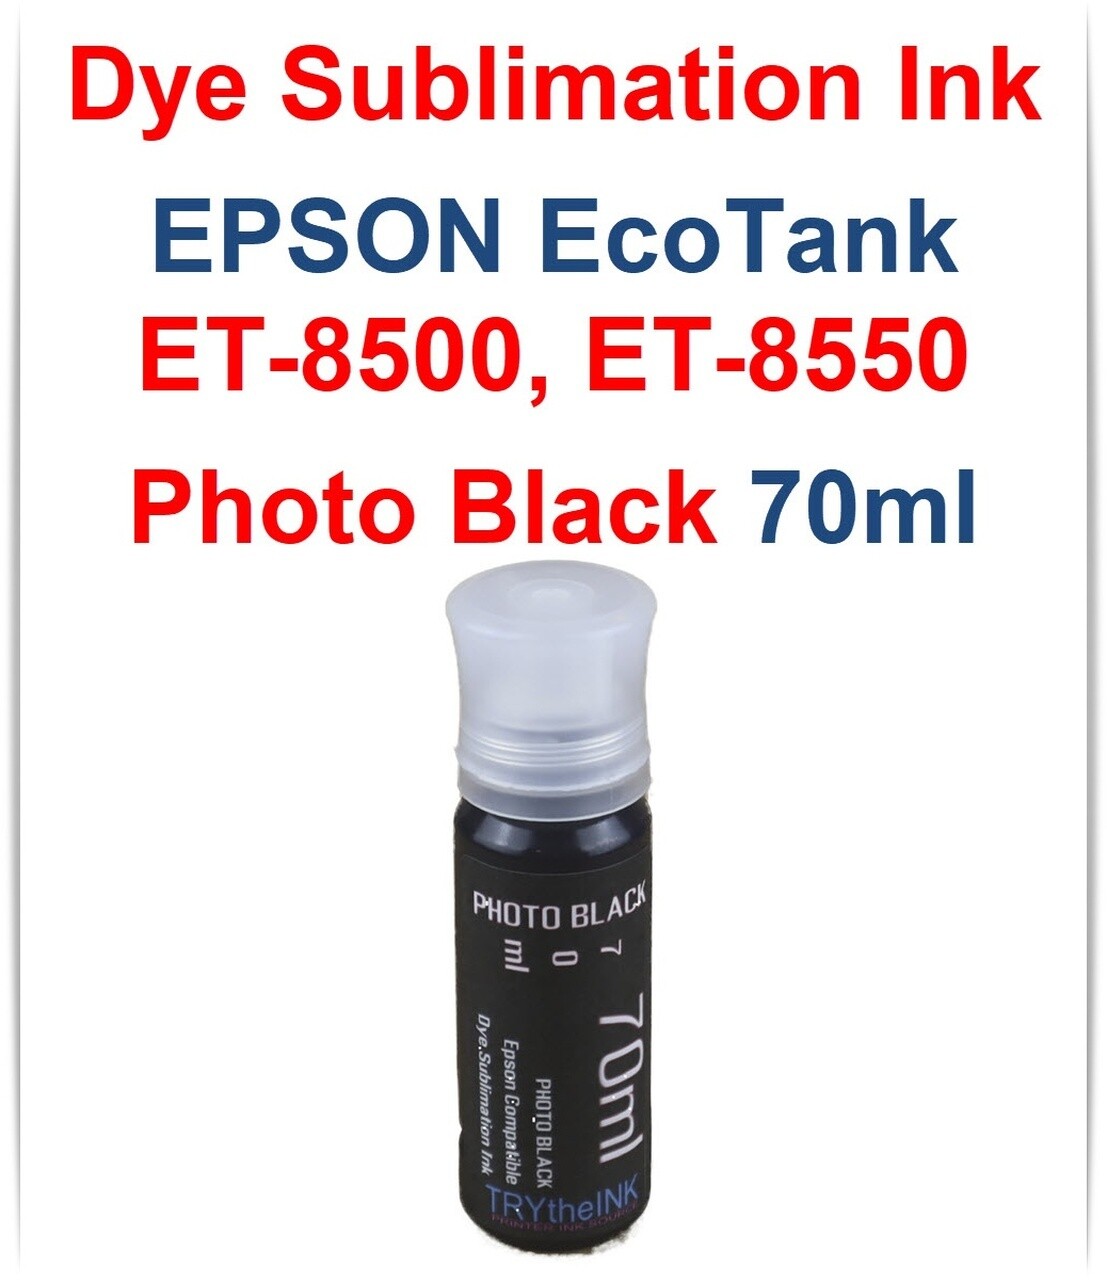 Photo Black Dye Sublimation Ink 70ml bottle for EPSON EcoTank ET-8500 ET-8550 printers